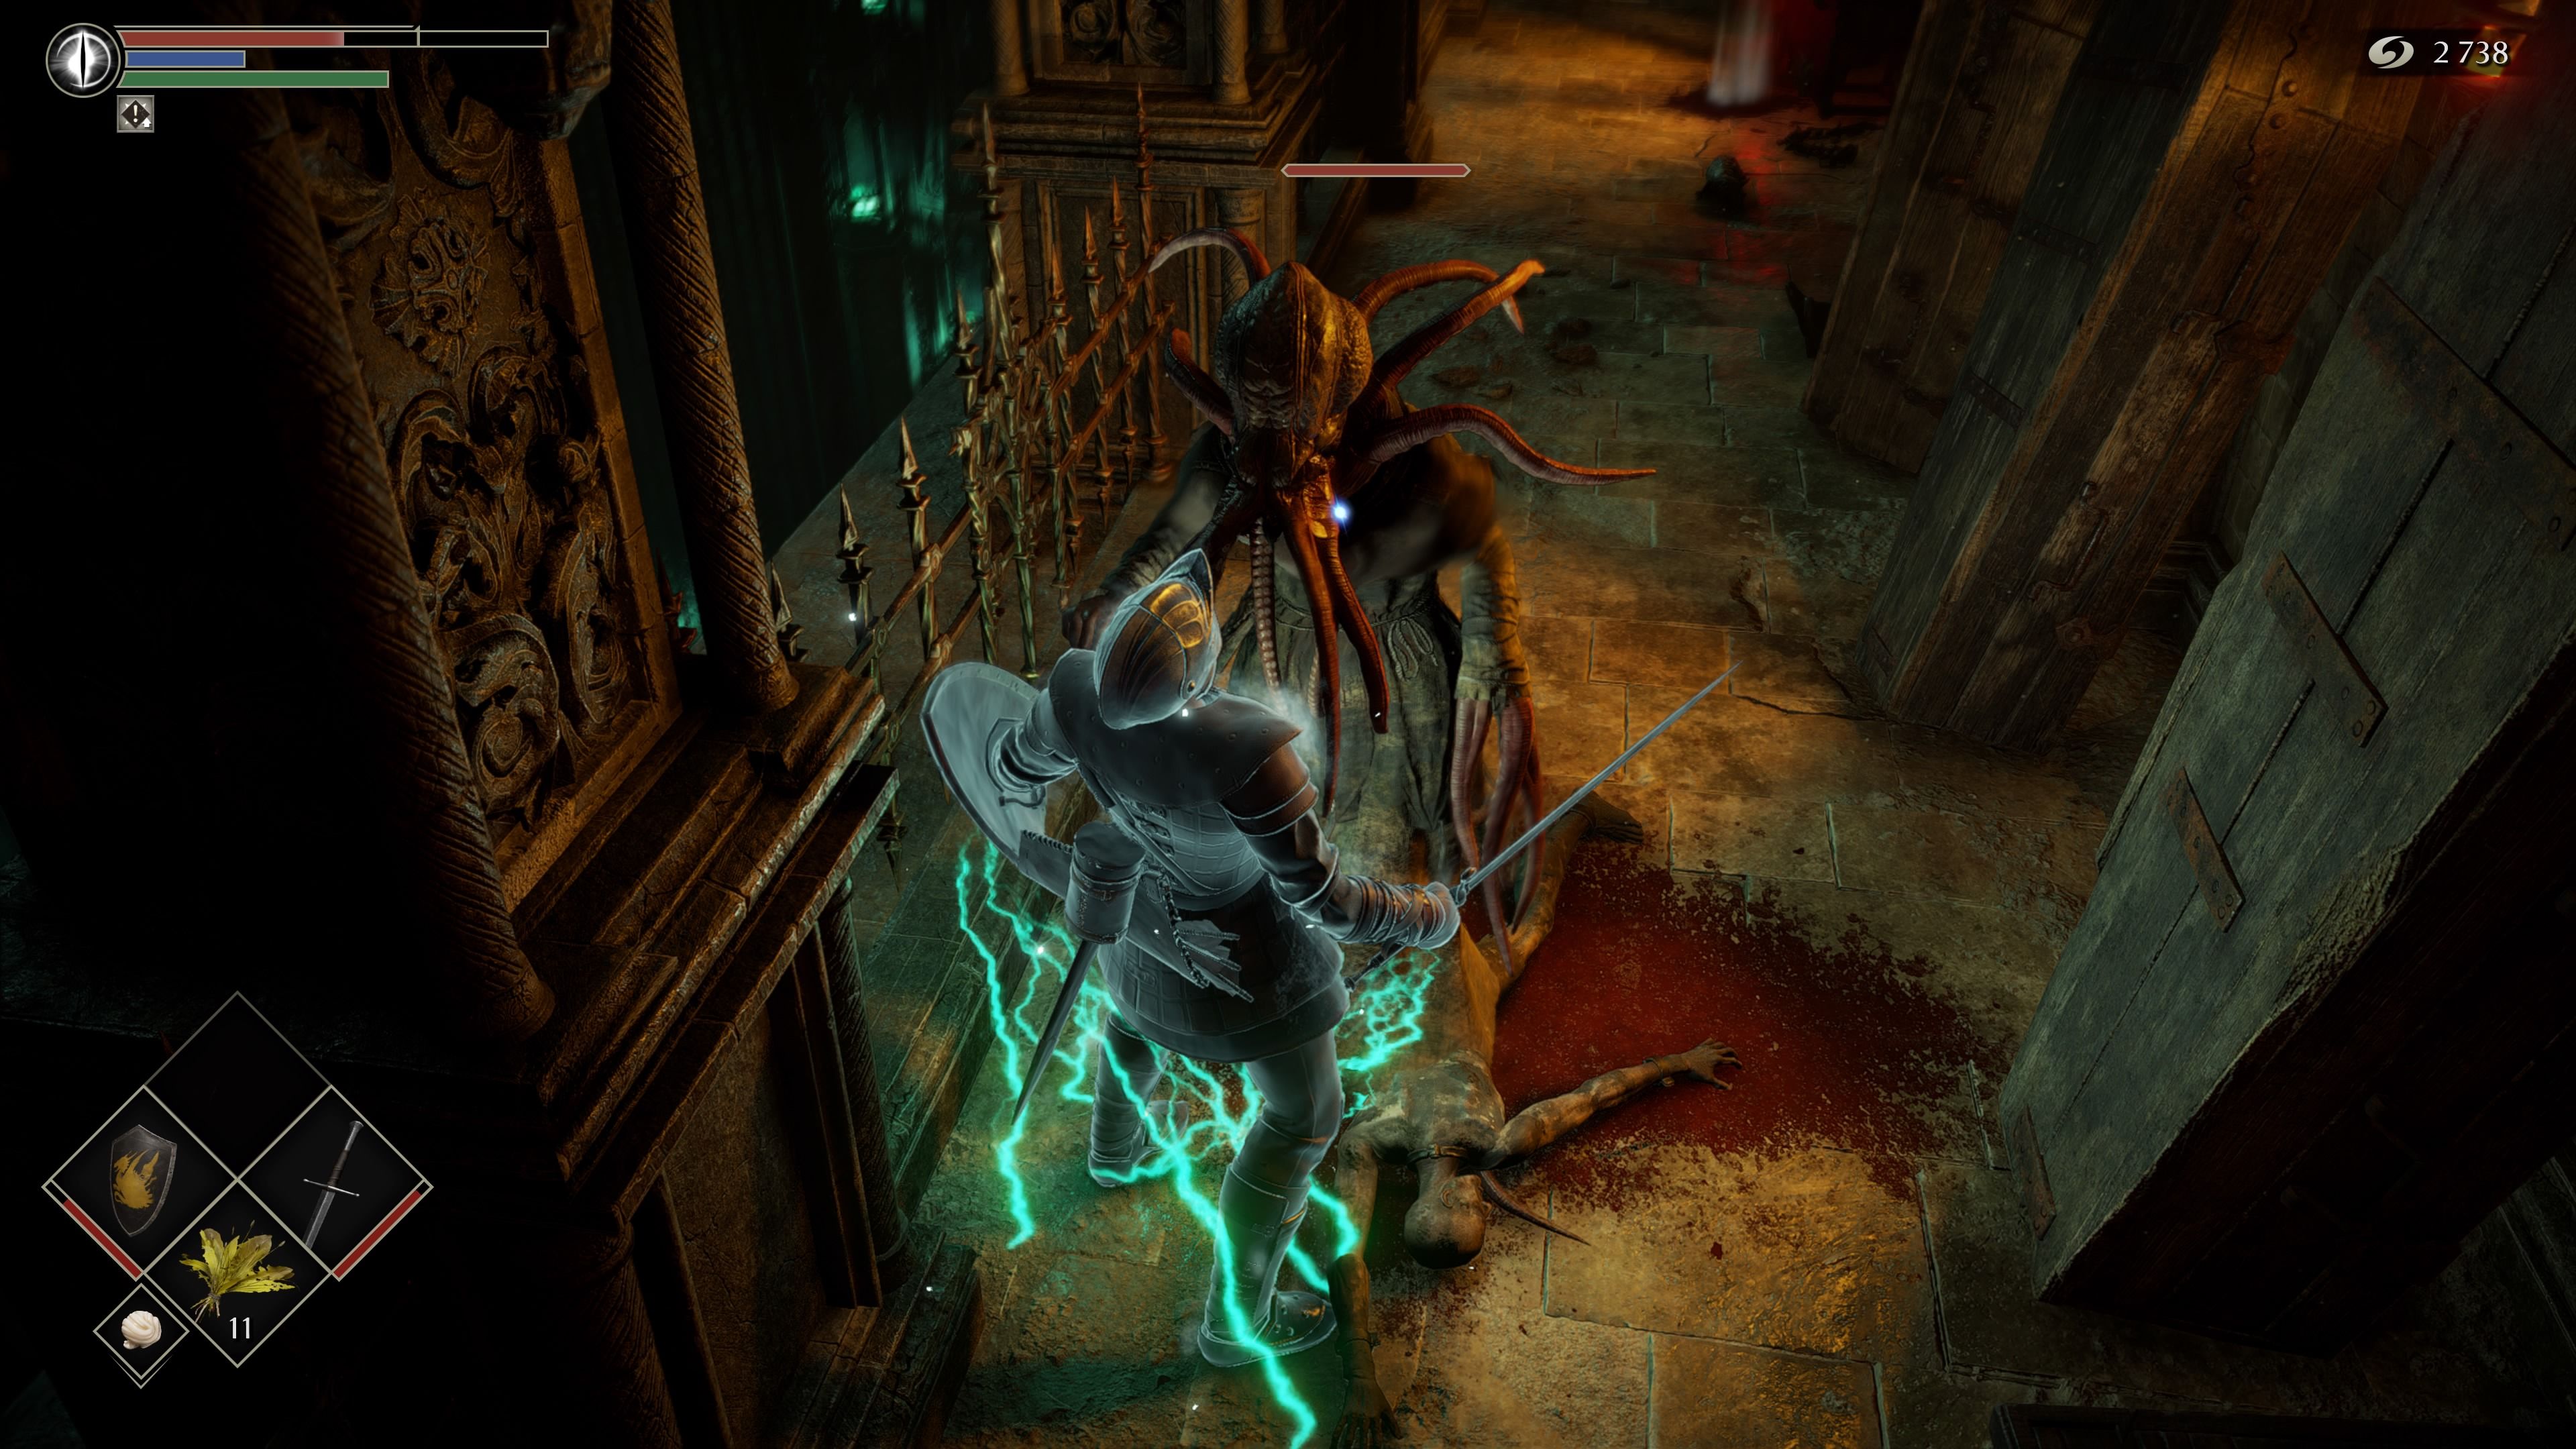 Análisis Demon's Souls Remake para PS5 - La verdadera next-gen